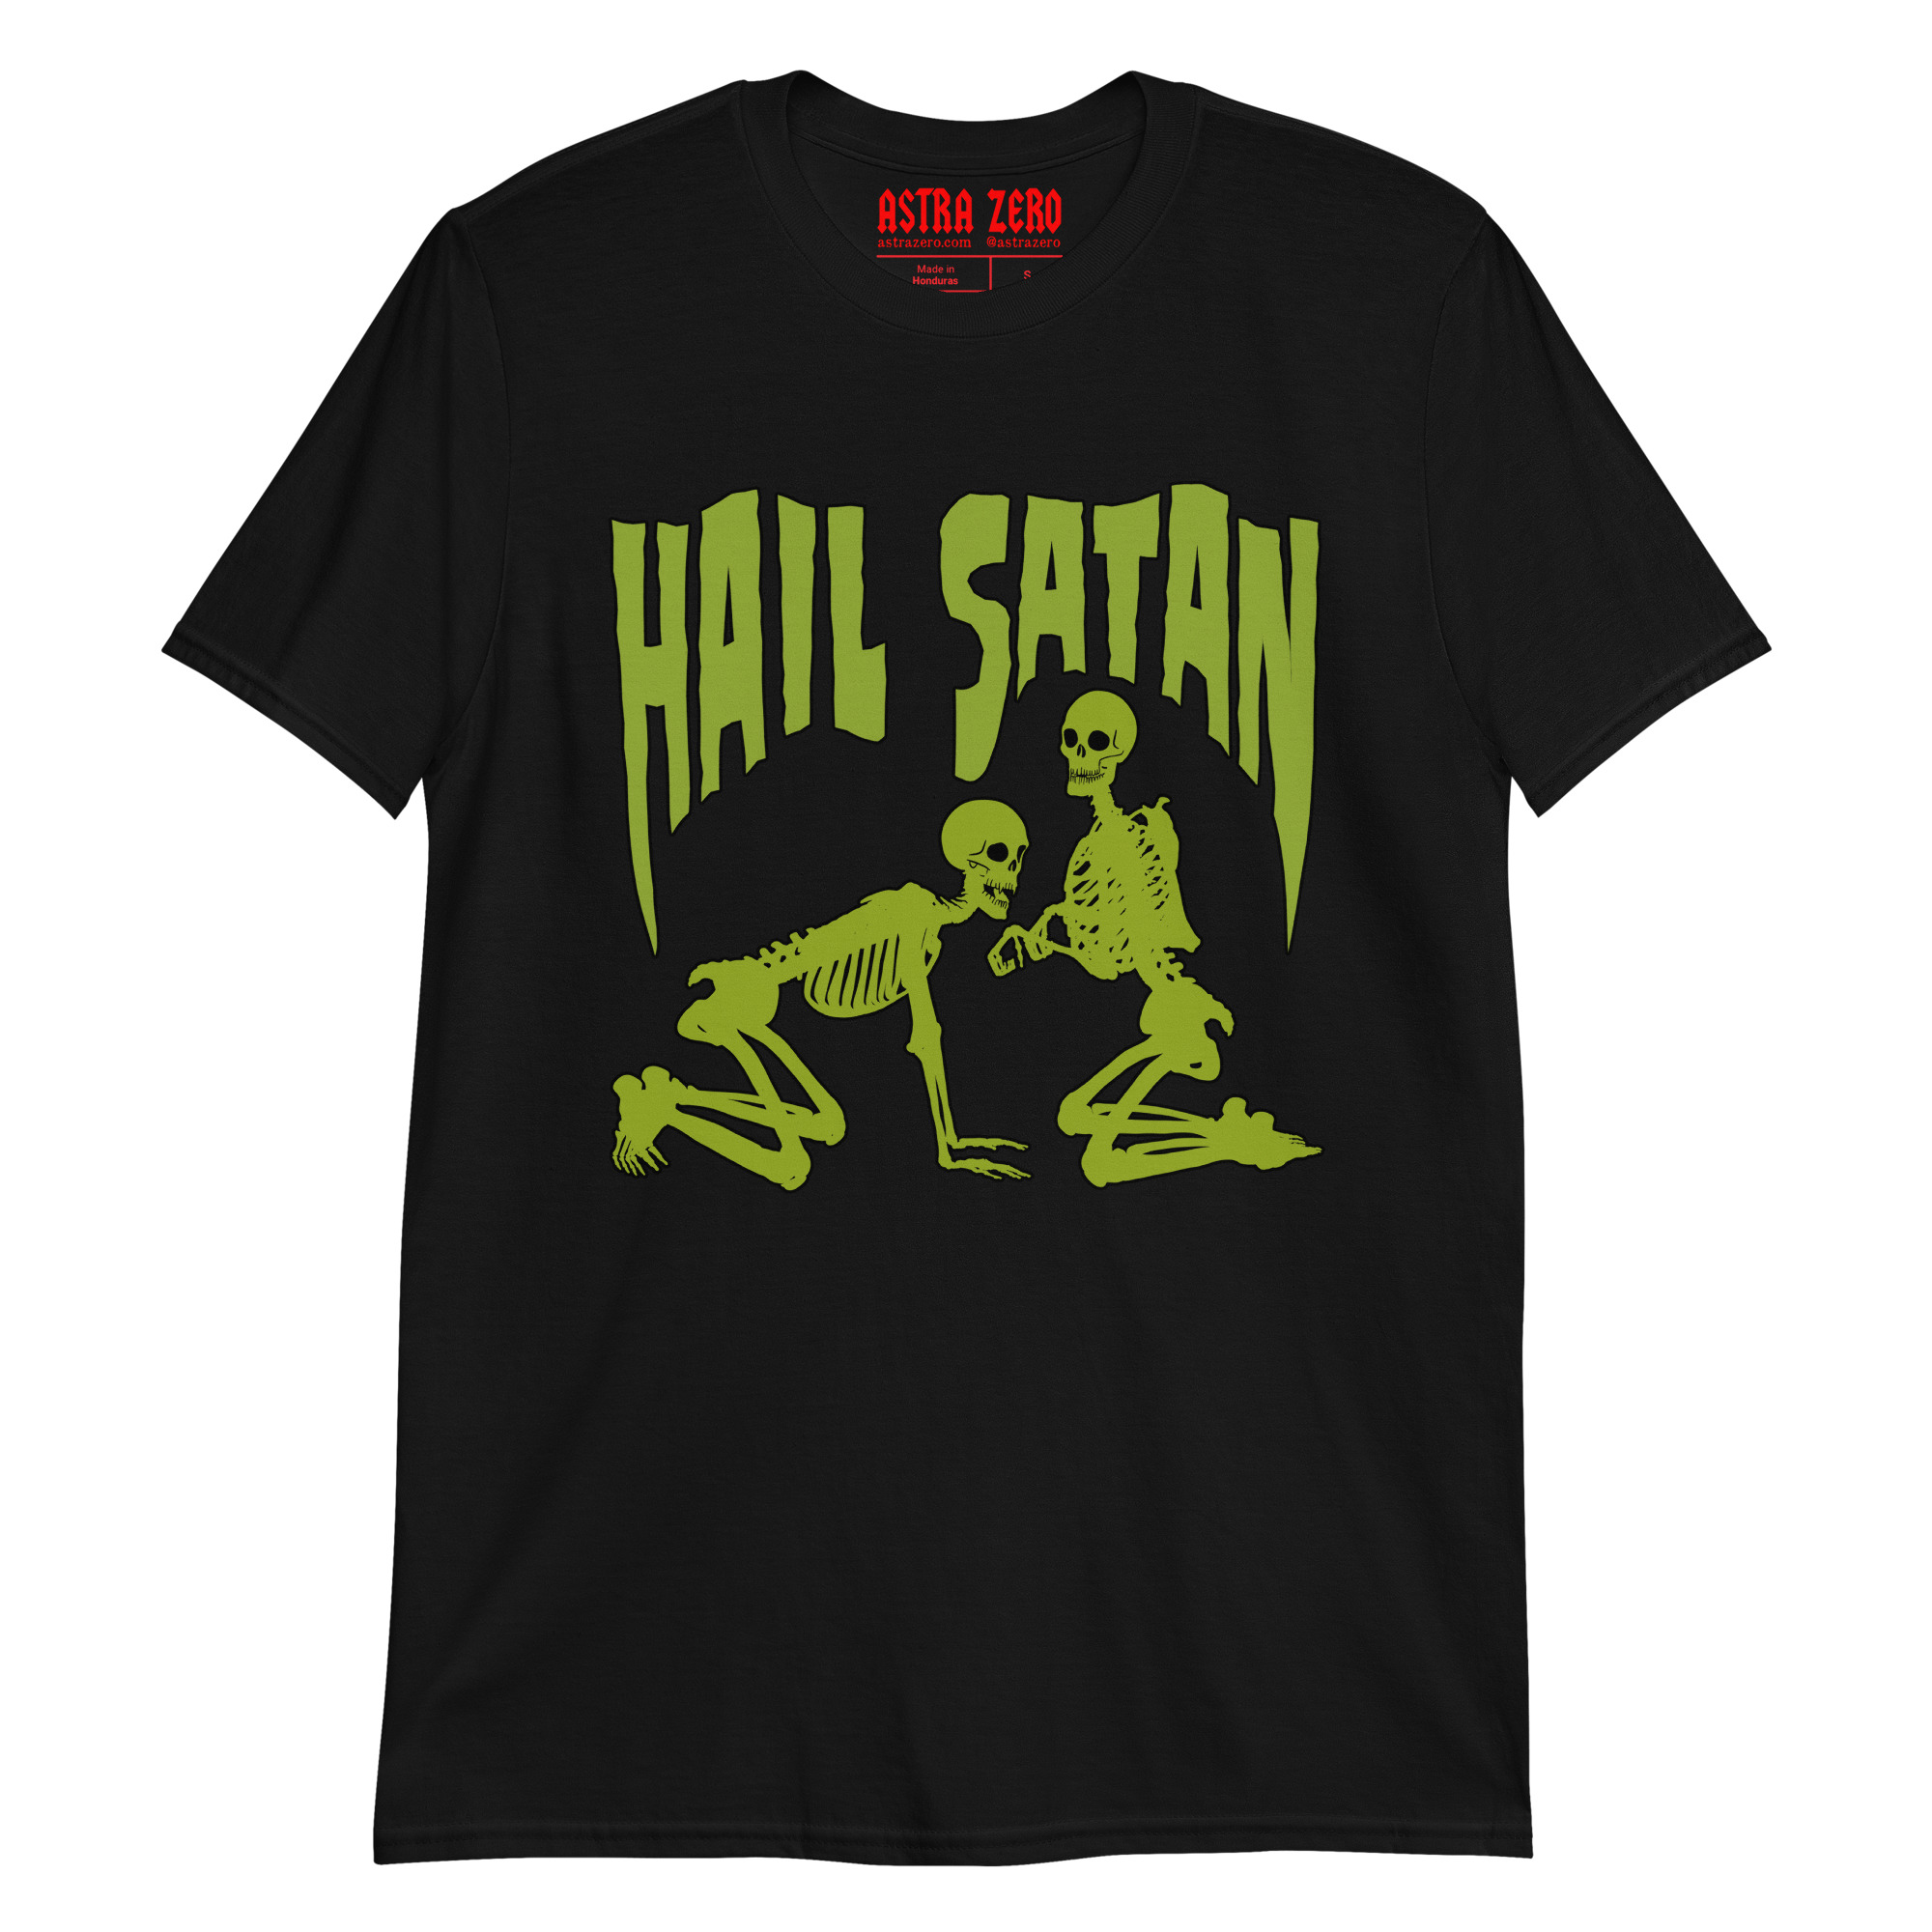 Featured image for “Hail Satan skeletons  - Short-Sleeve Unisex T-Shirt”